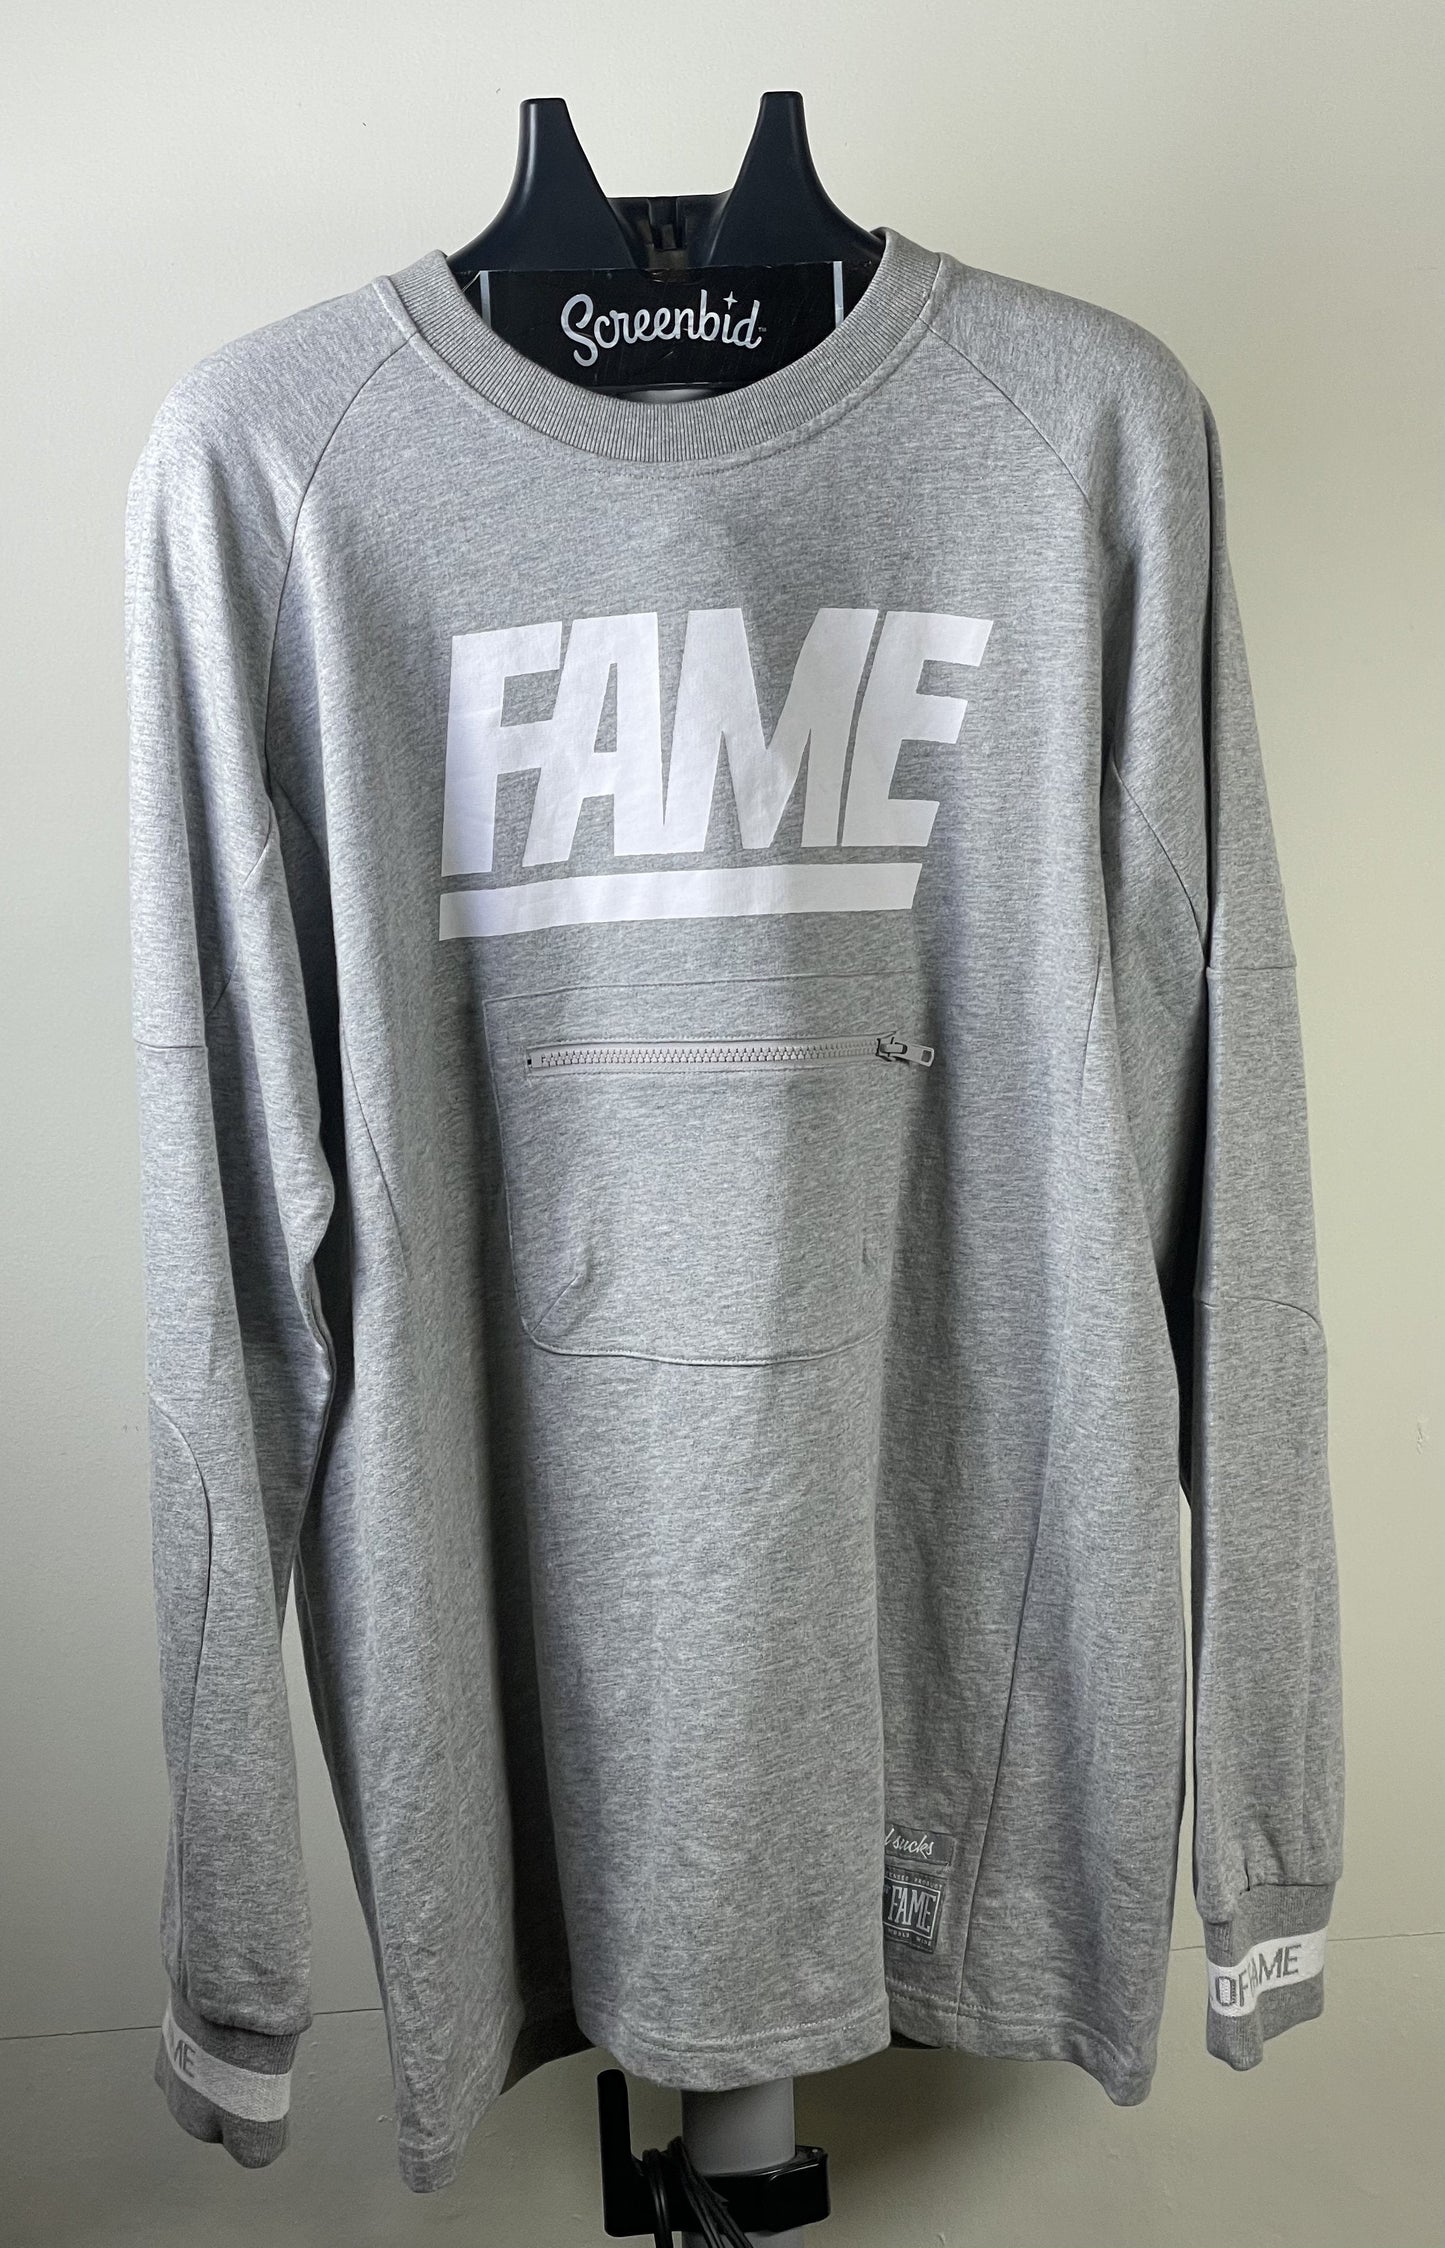 NEW GIRL: Coach's FAME Brand Long Sleeve Shirt (L)